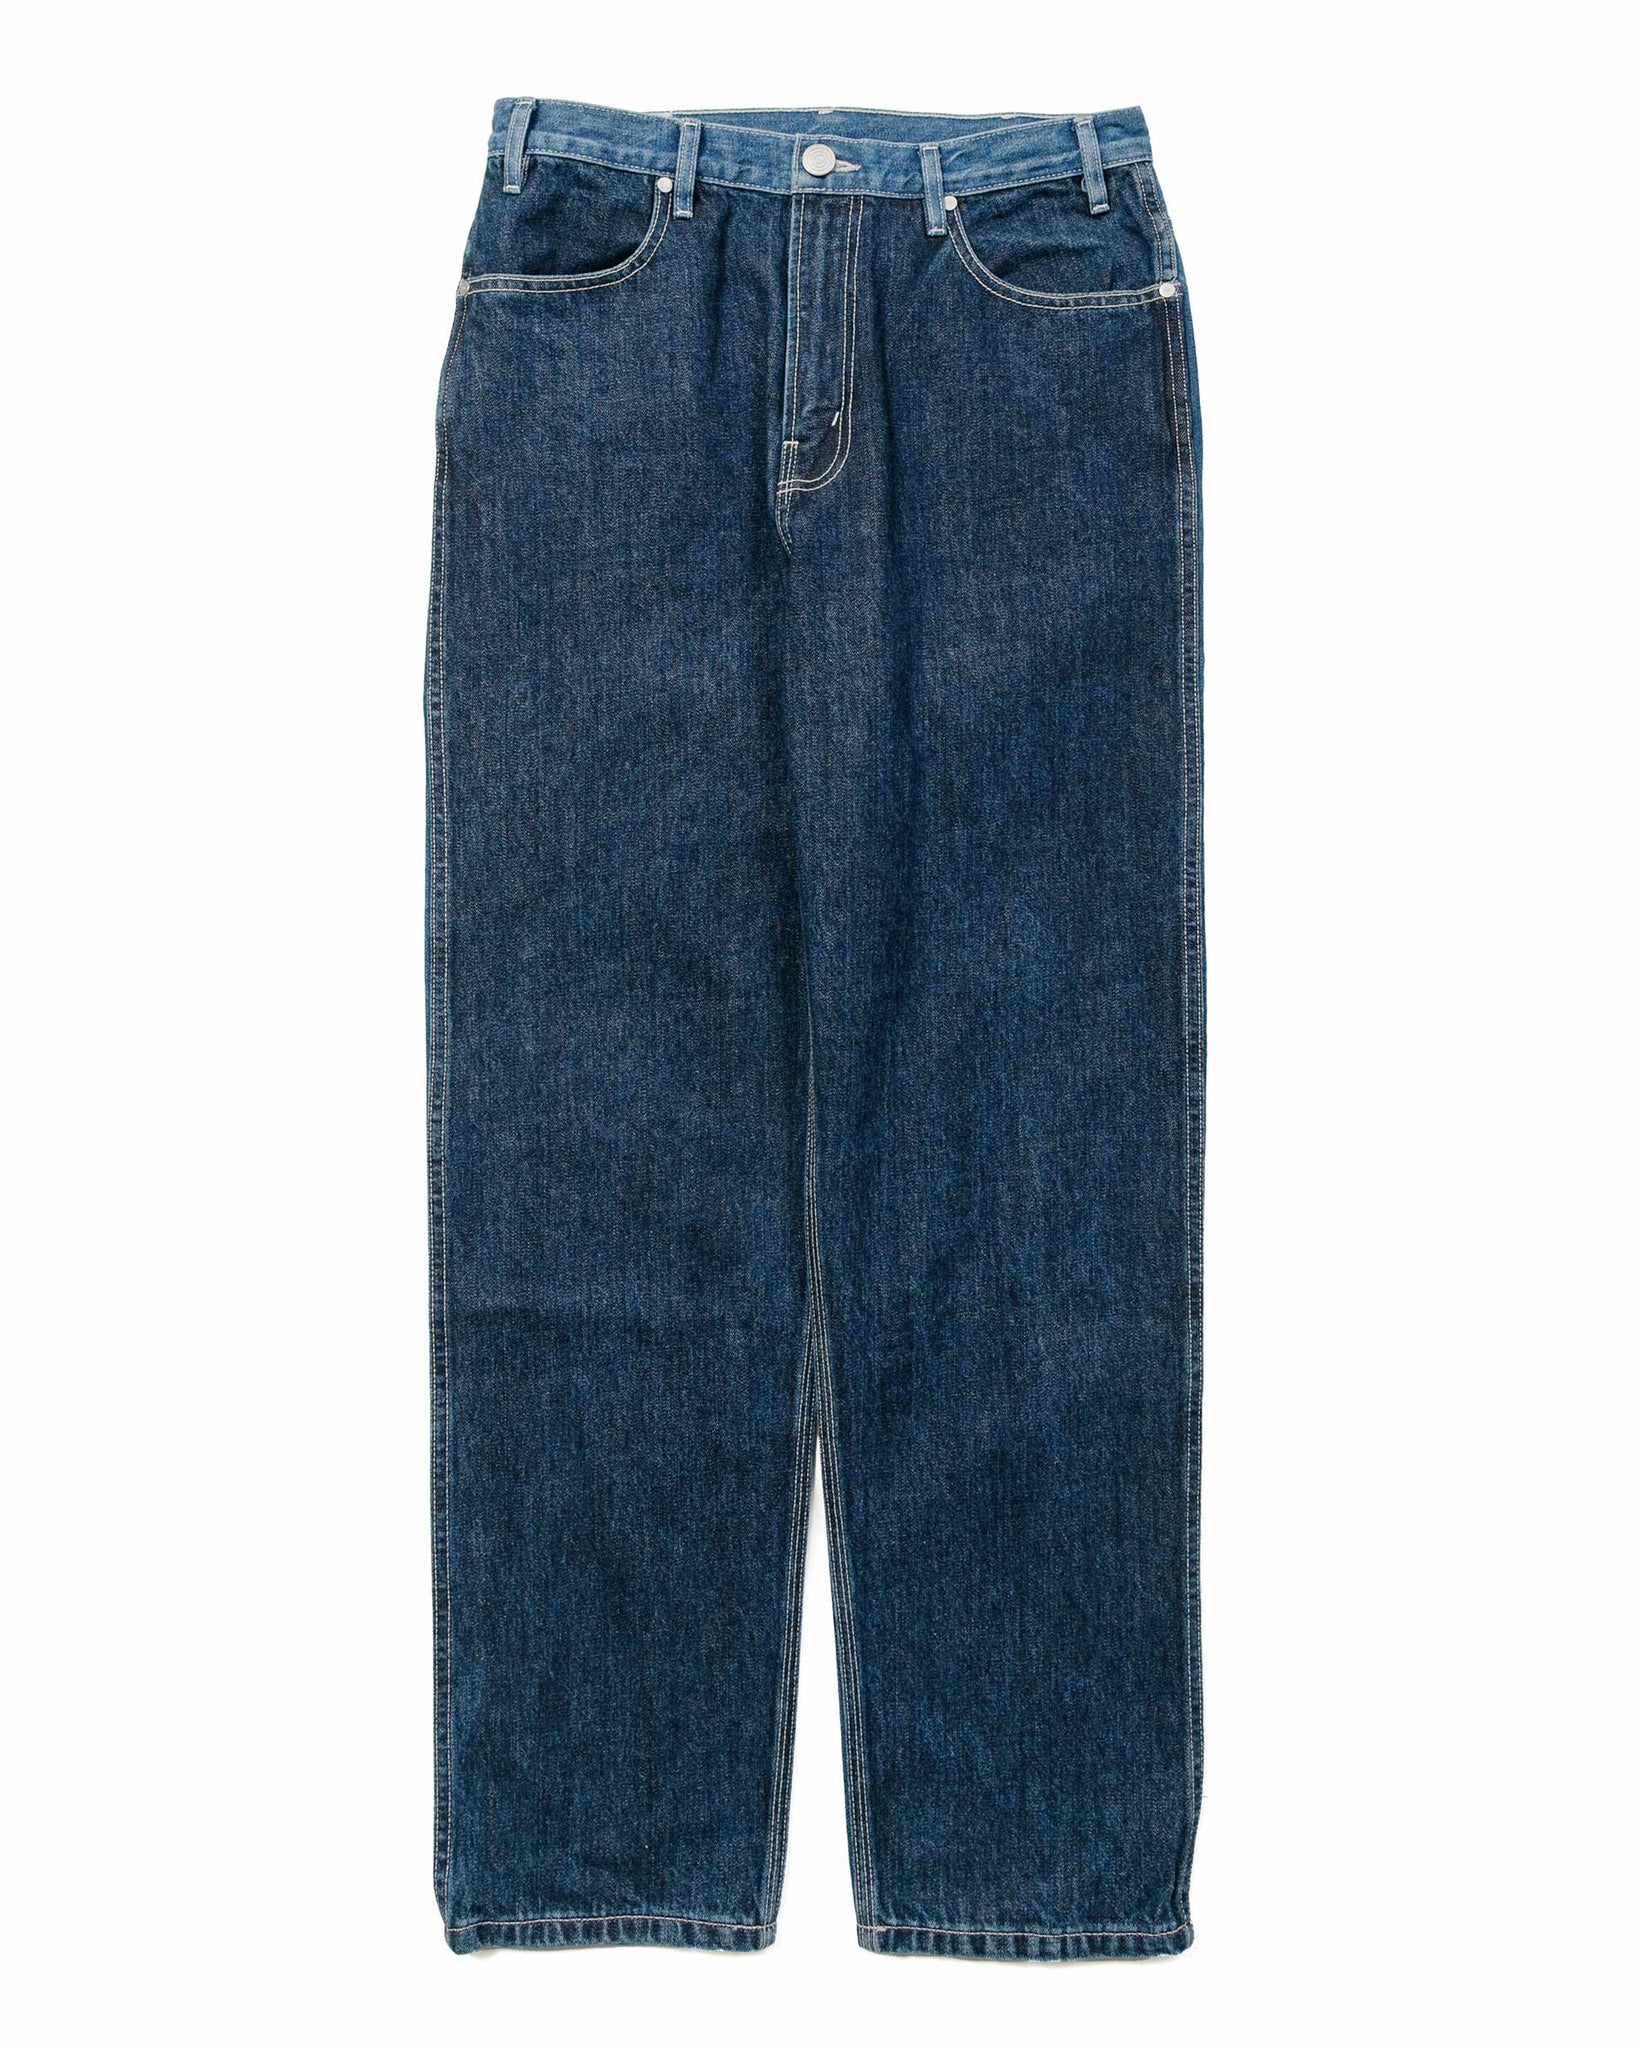 Men's Stylish Cargo Shirt And Denim Jeans Combo - Evilato